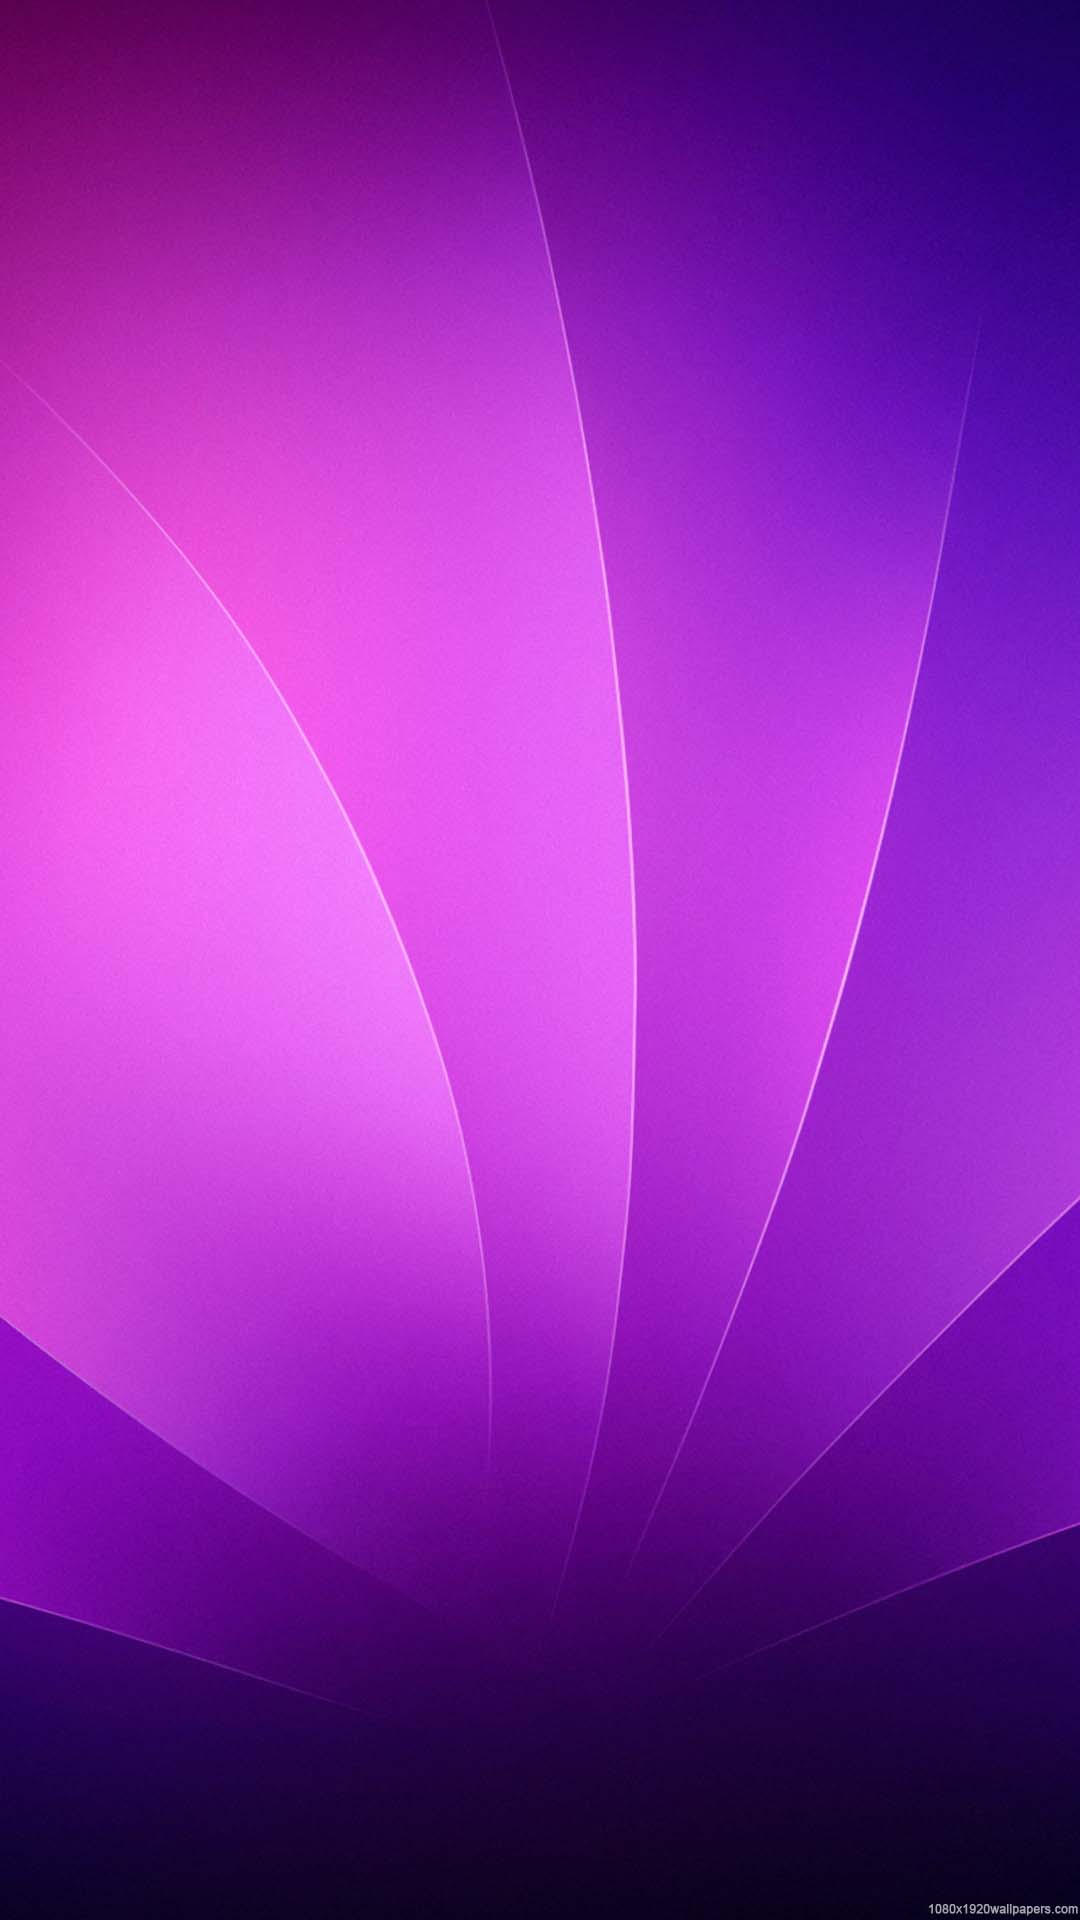 Purple iPhone Wallpaper HD